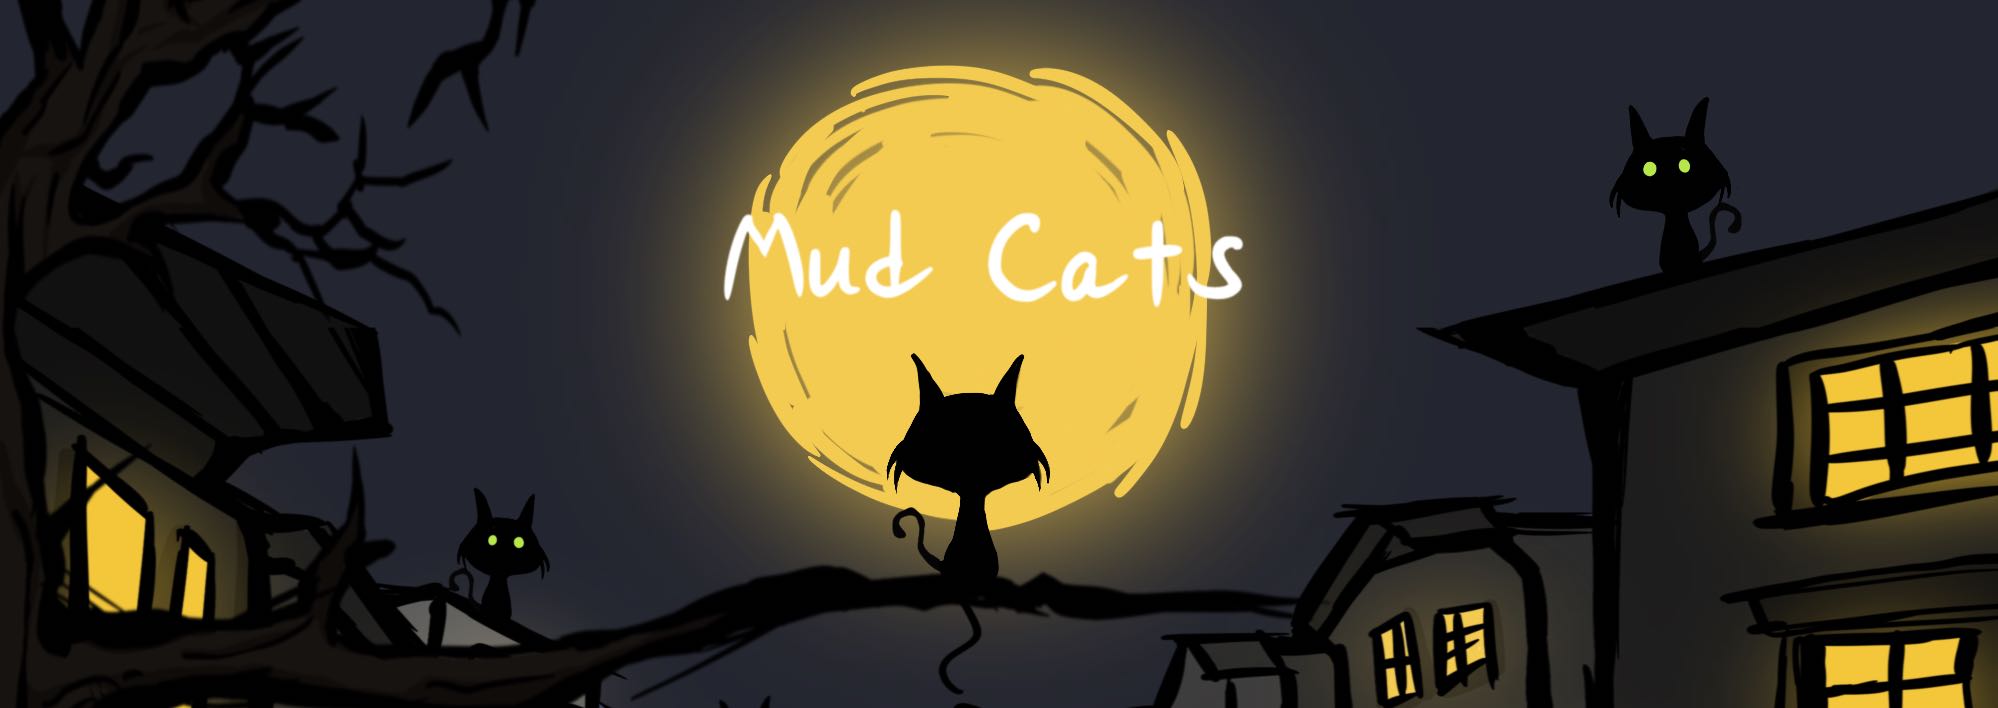 Mud Cats